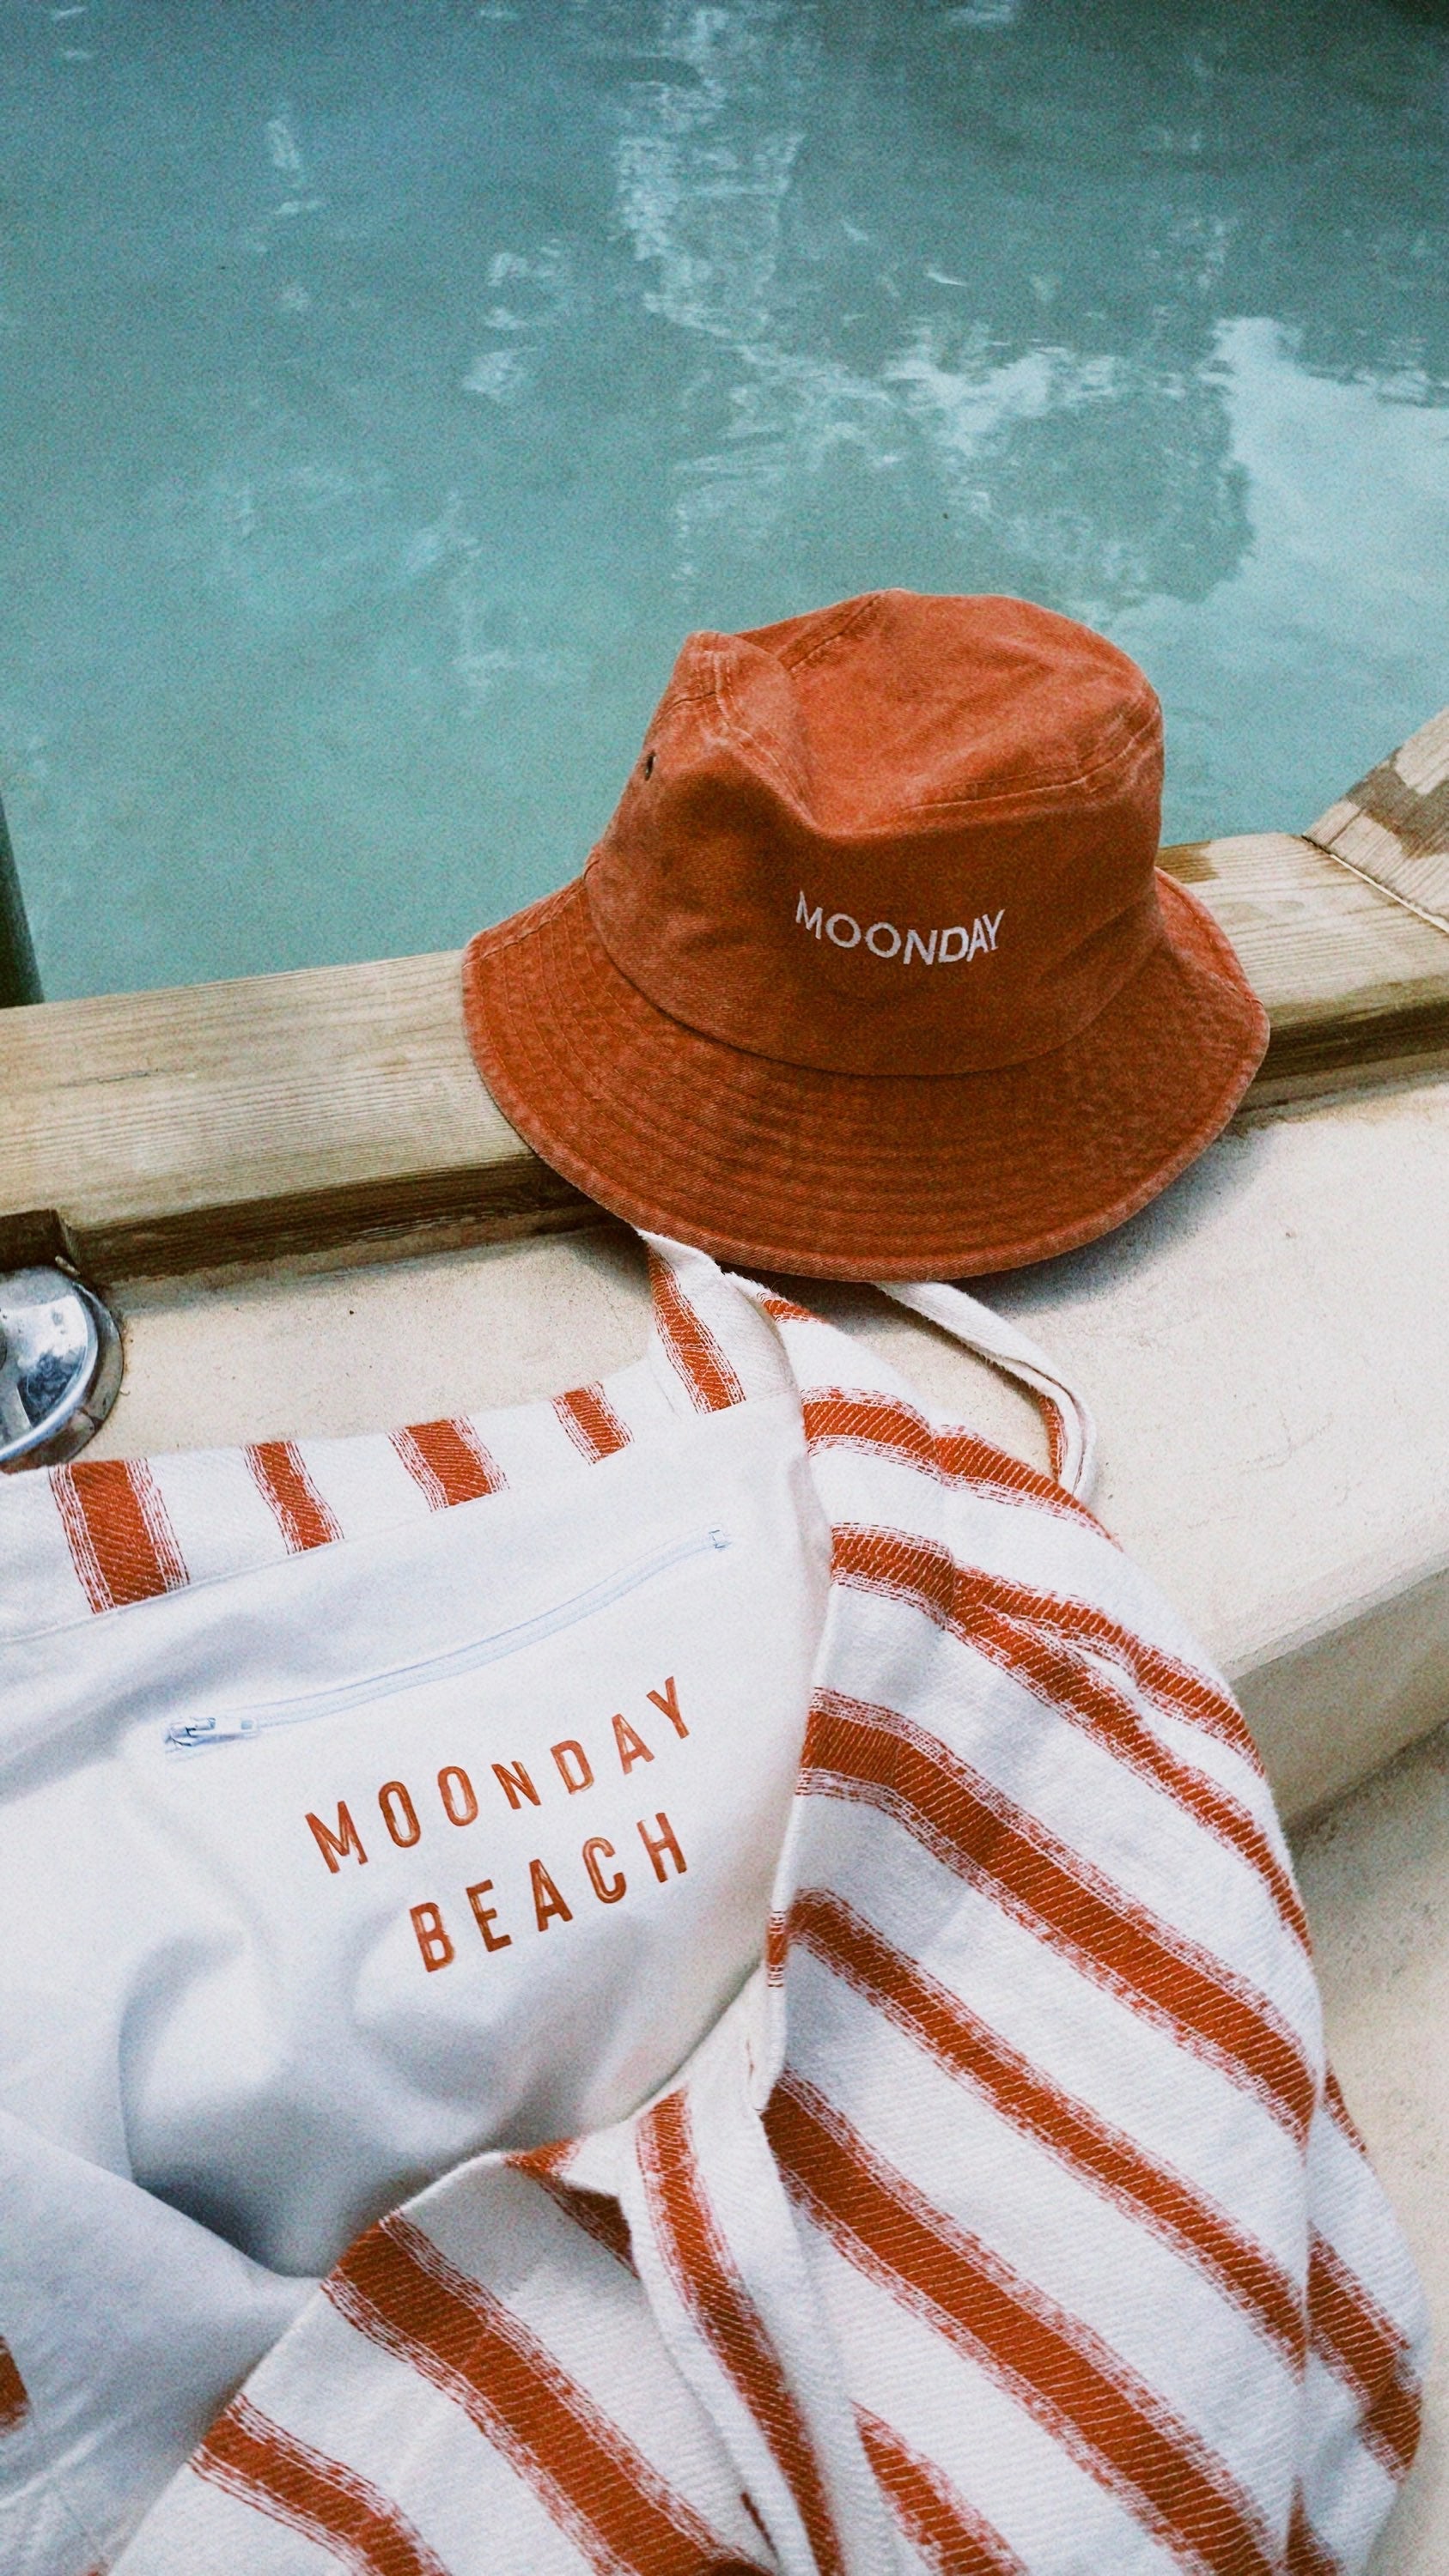 Moonday Beach bag